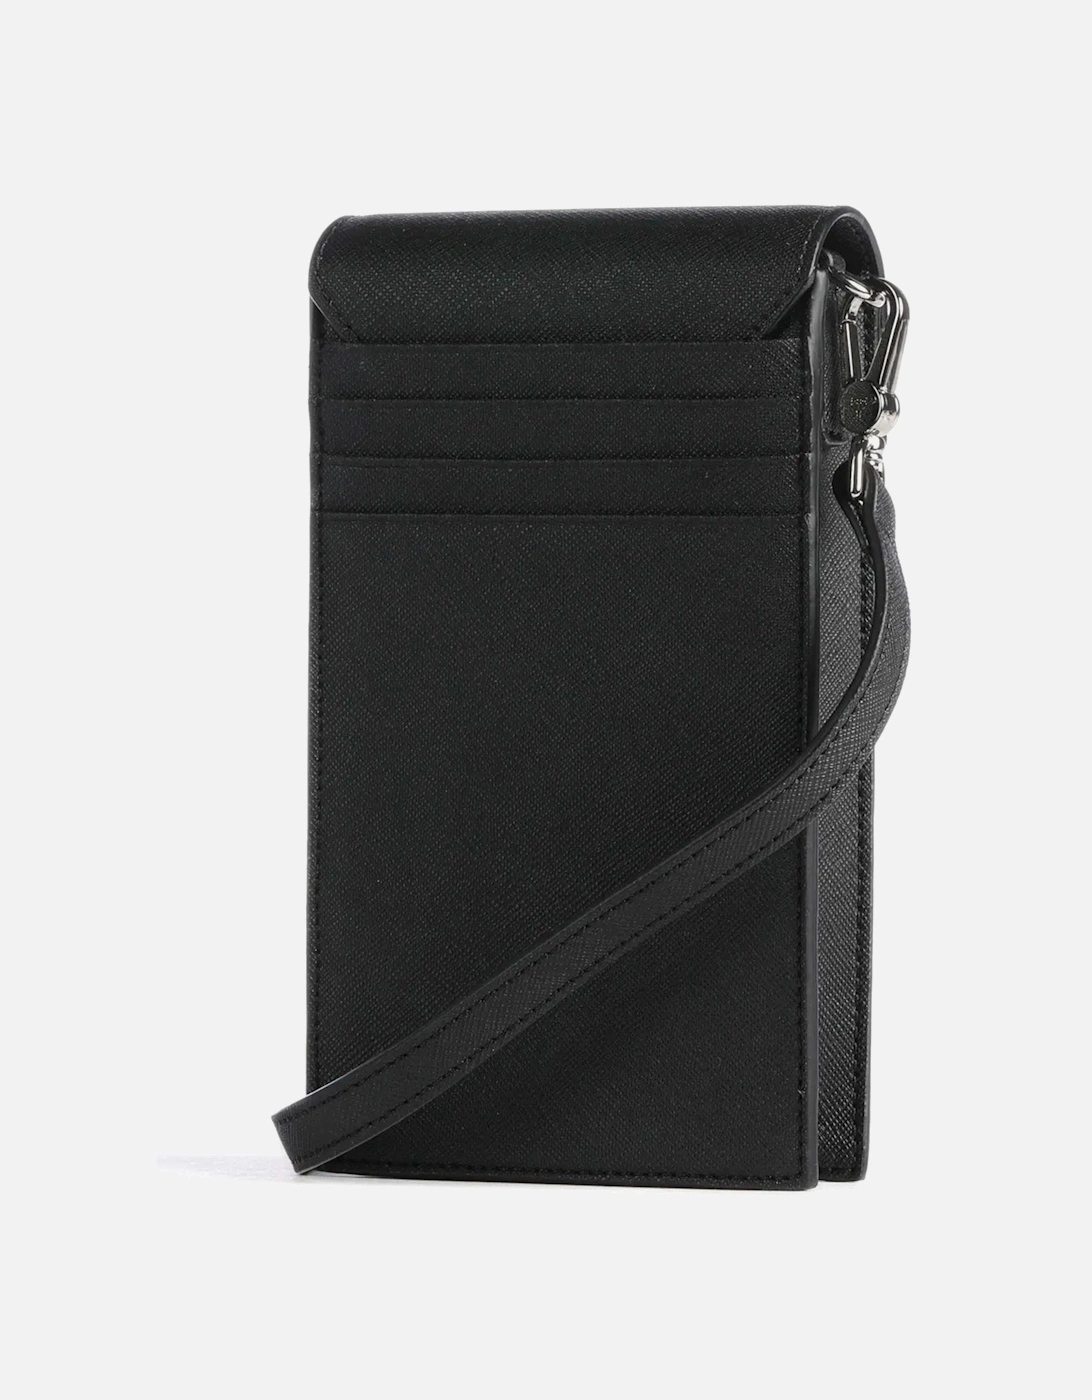 Saffinao Phone Case Black Crossbody Bag